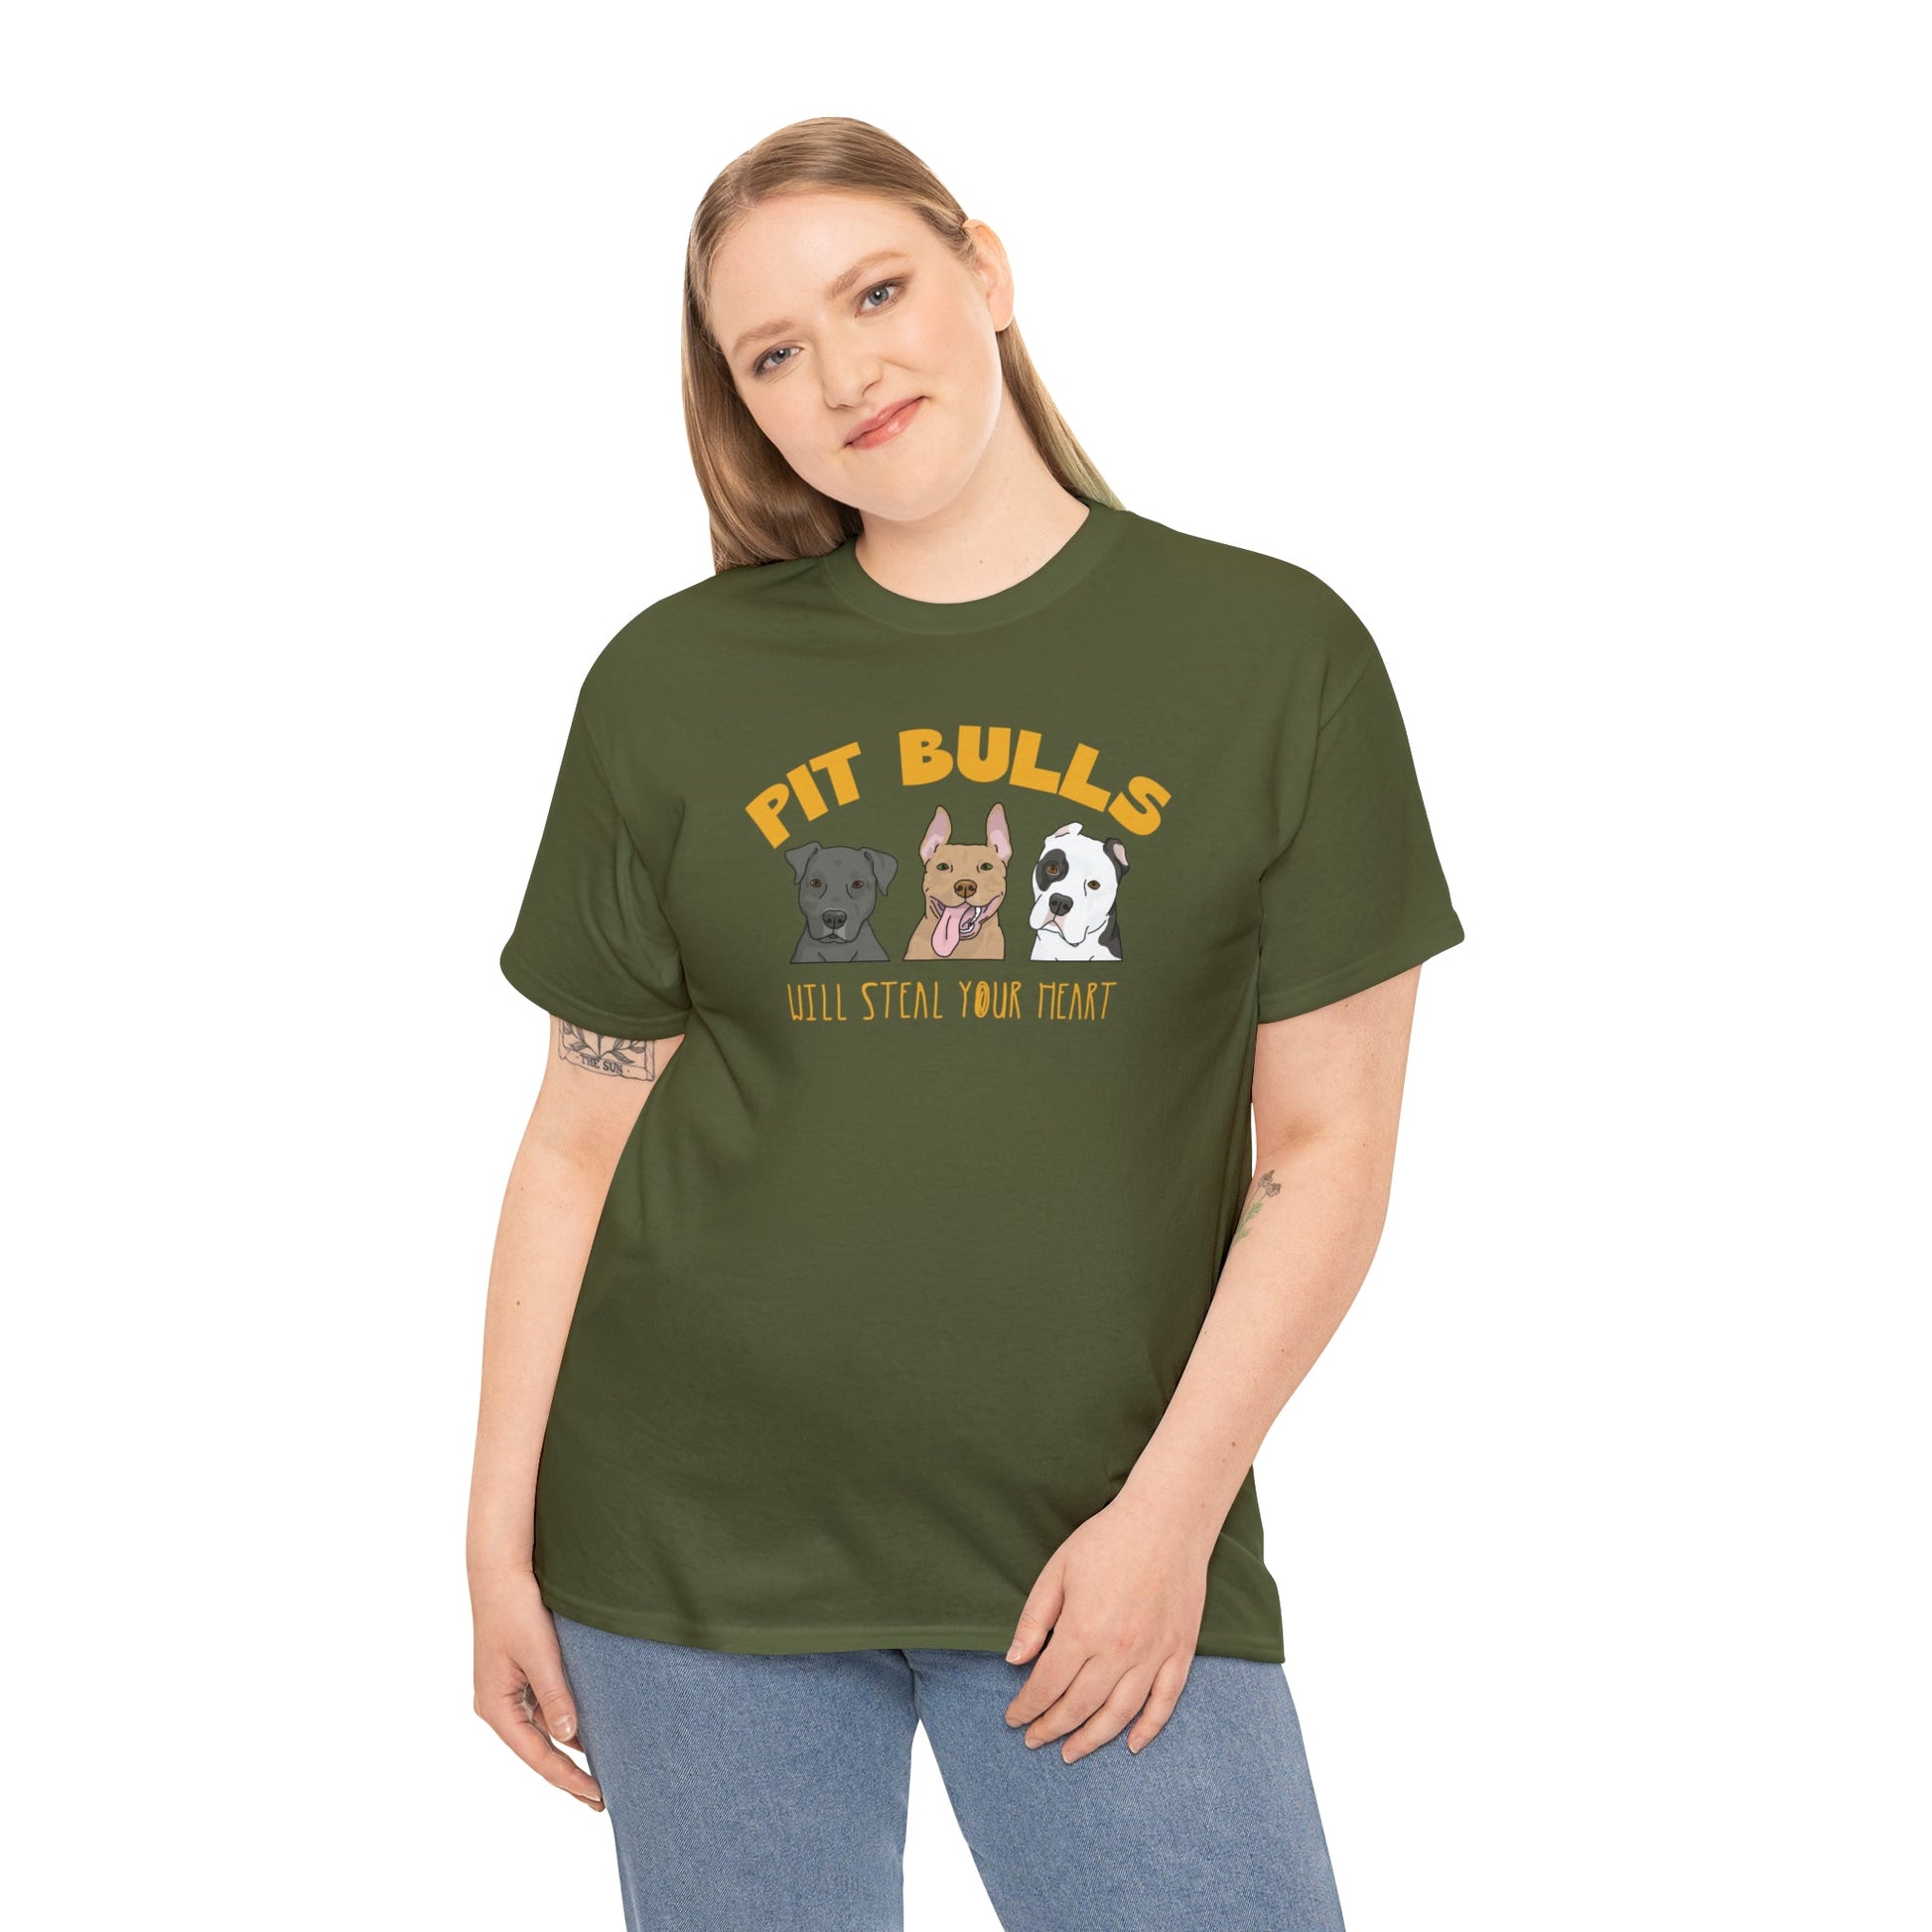 Pit Bulls Will Steal Your Heart | T-shirt - Detezi Designs-20259672468035032699